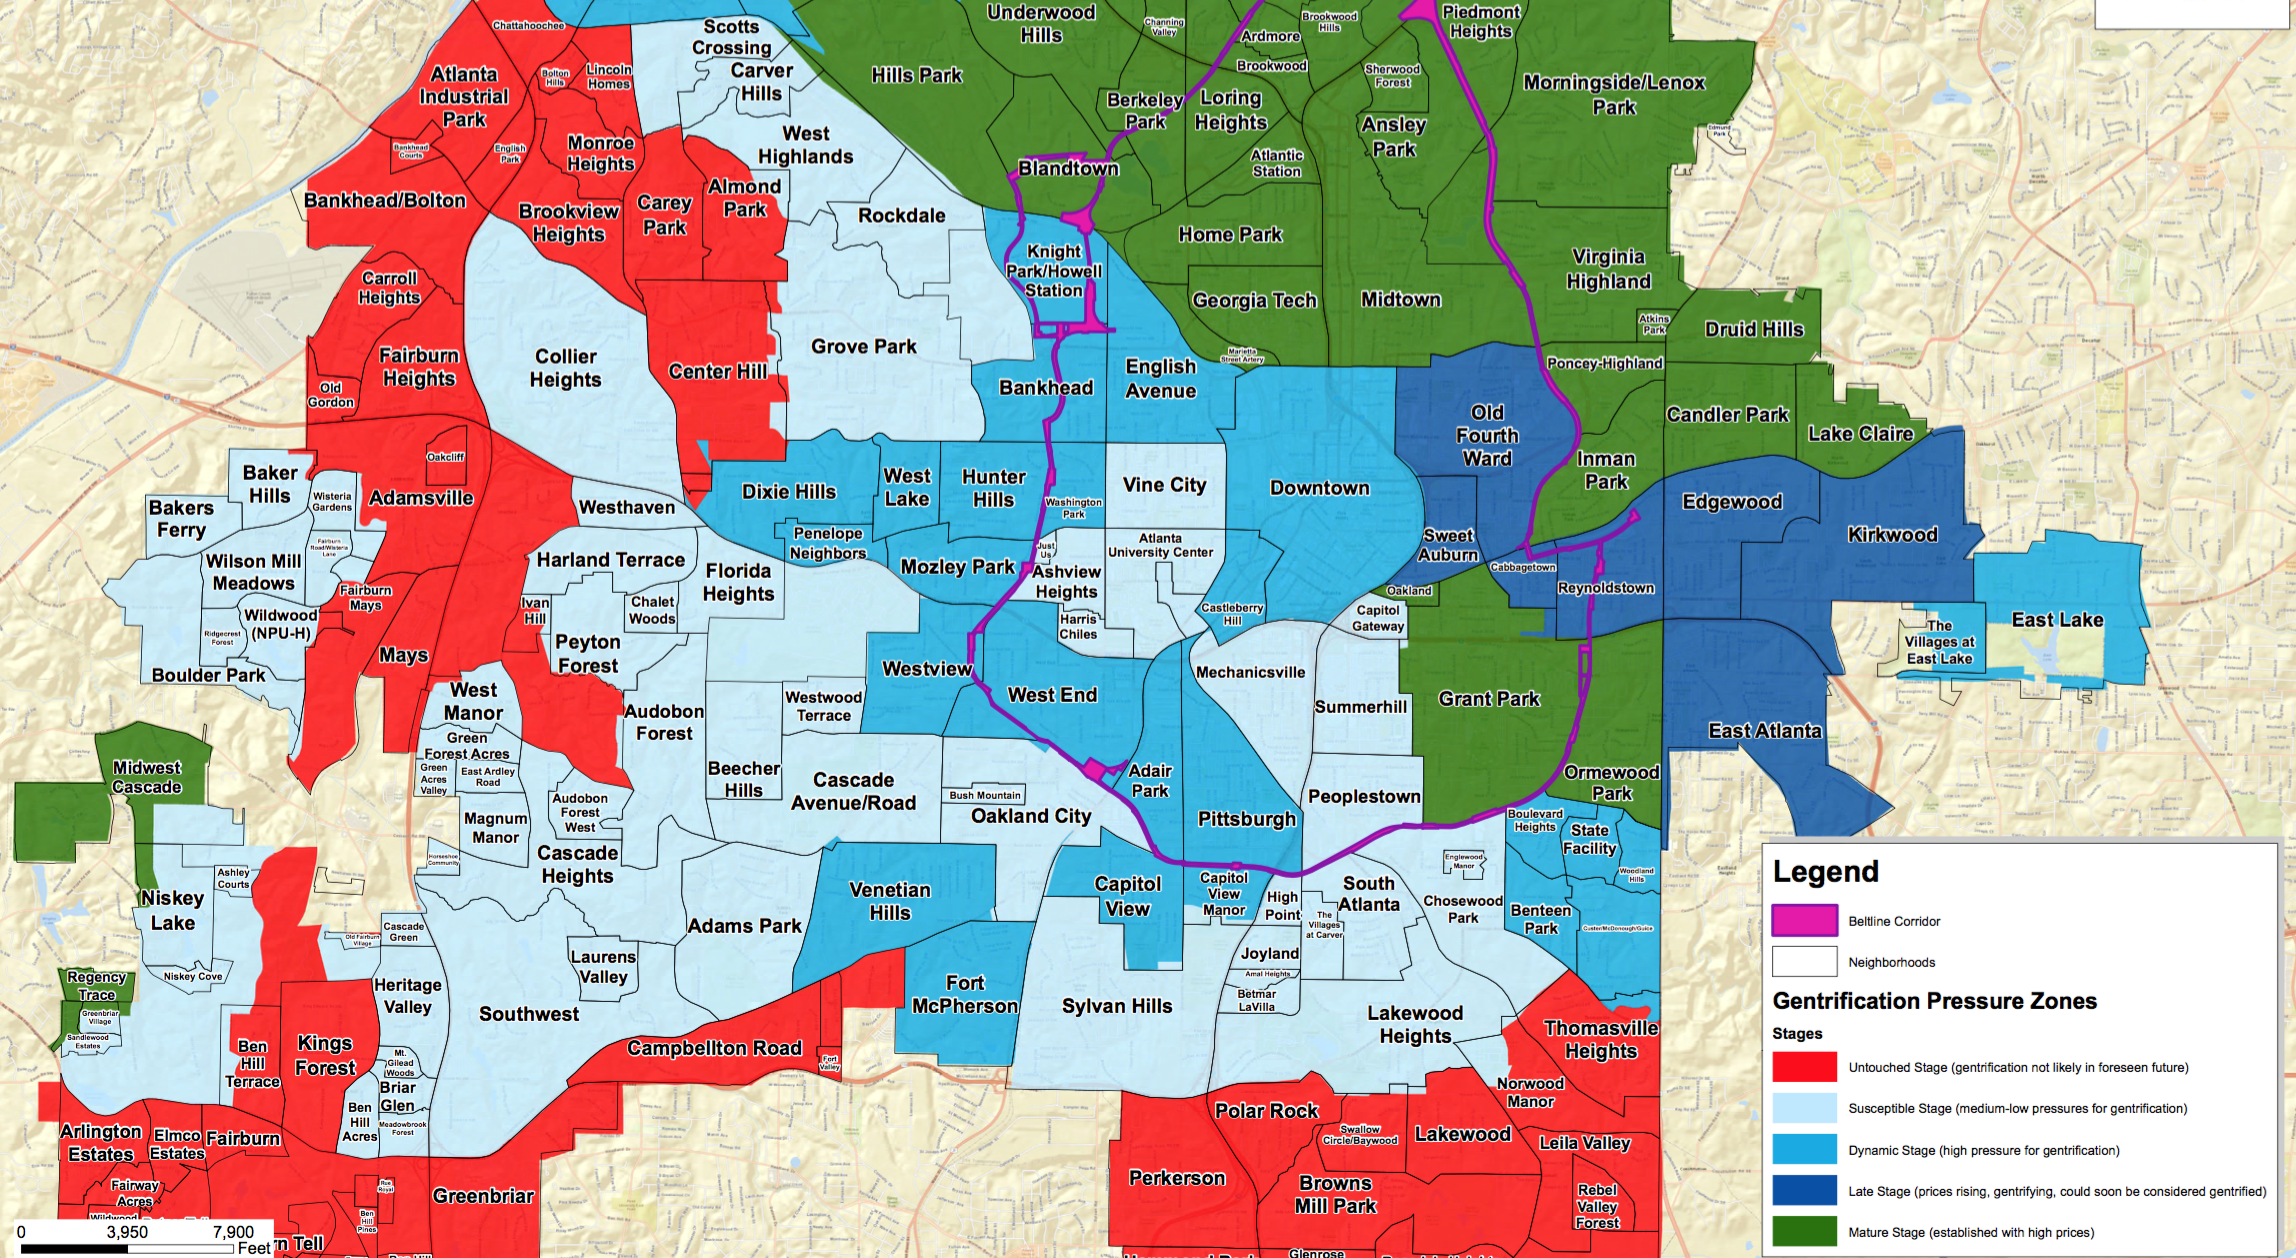 Map of gentrification pressure zones in Atlanta